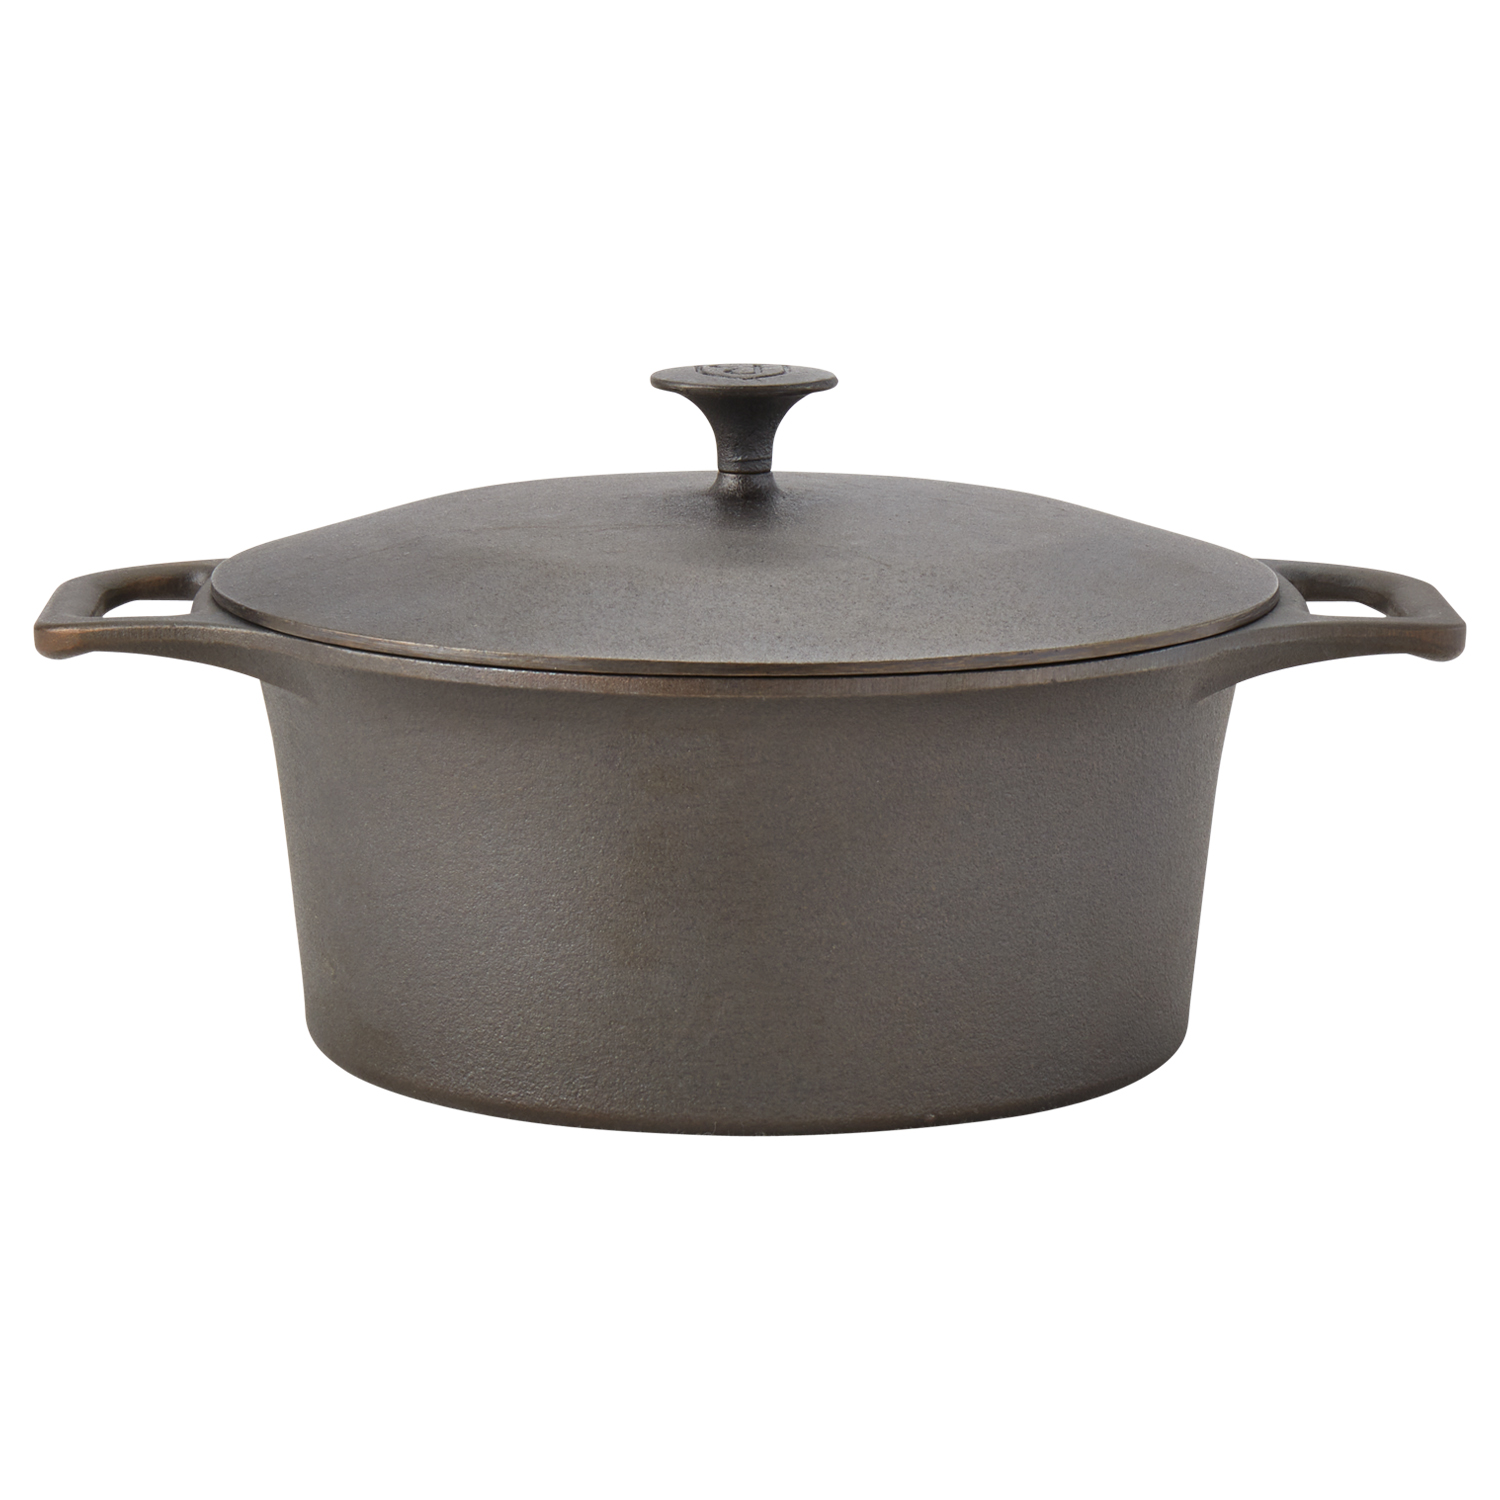 Cast iron Dutch oven and Lodge melting pot - Northern Kentucky Auction, LLC